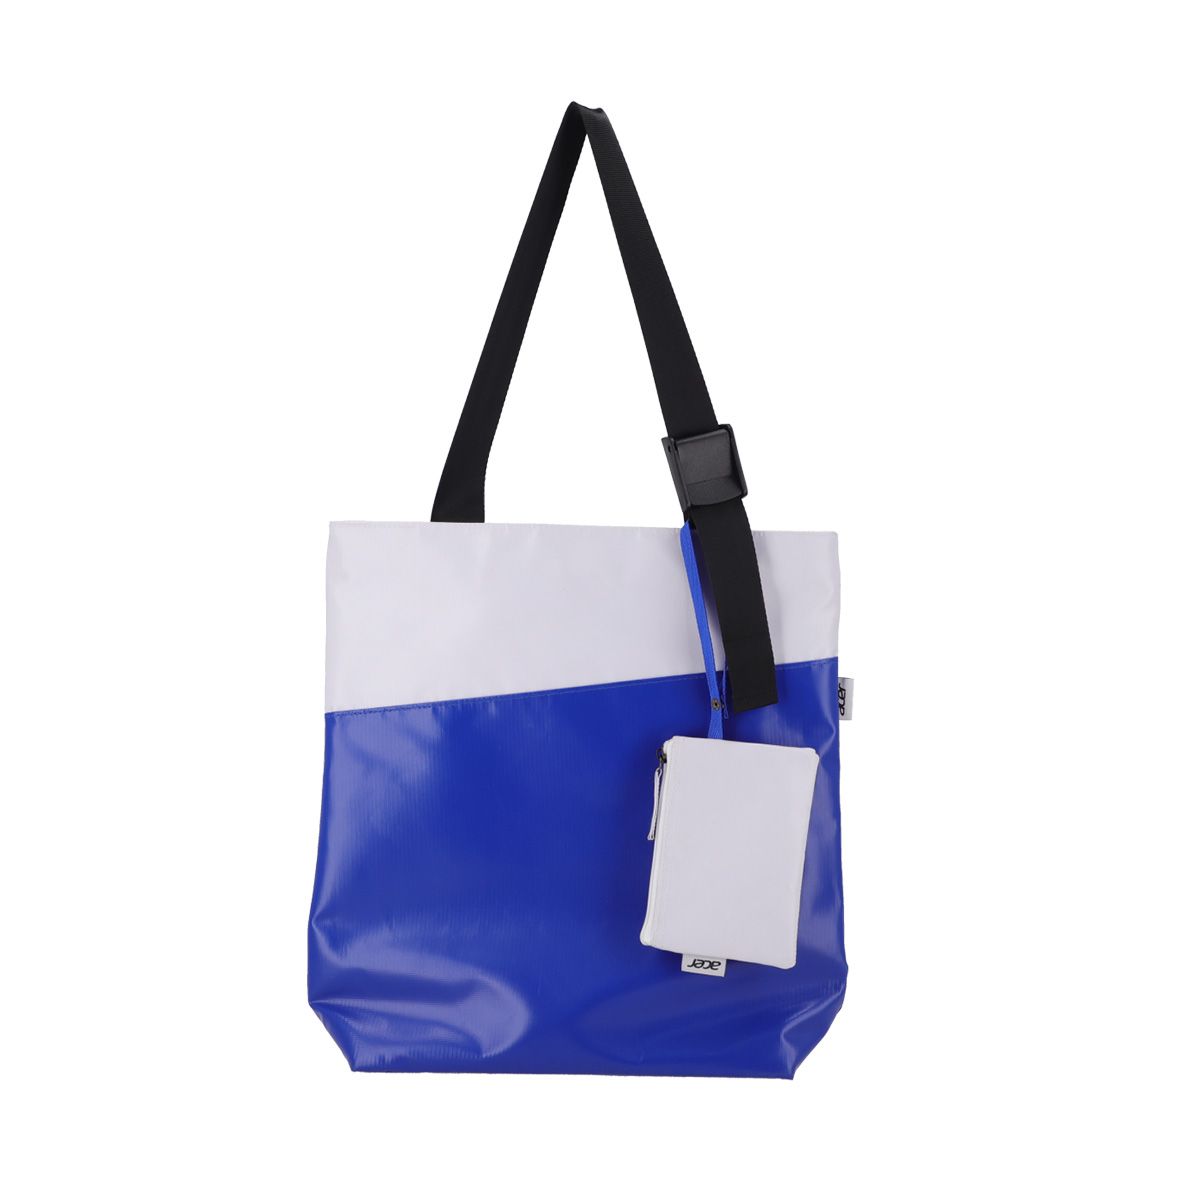 BAG (กระเป๋าใส่โน๊ตบุ๊ค) ACER TOTE BAG (5T.67451.012)WHITE/BLUE